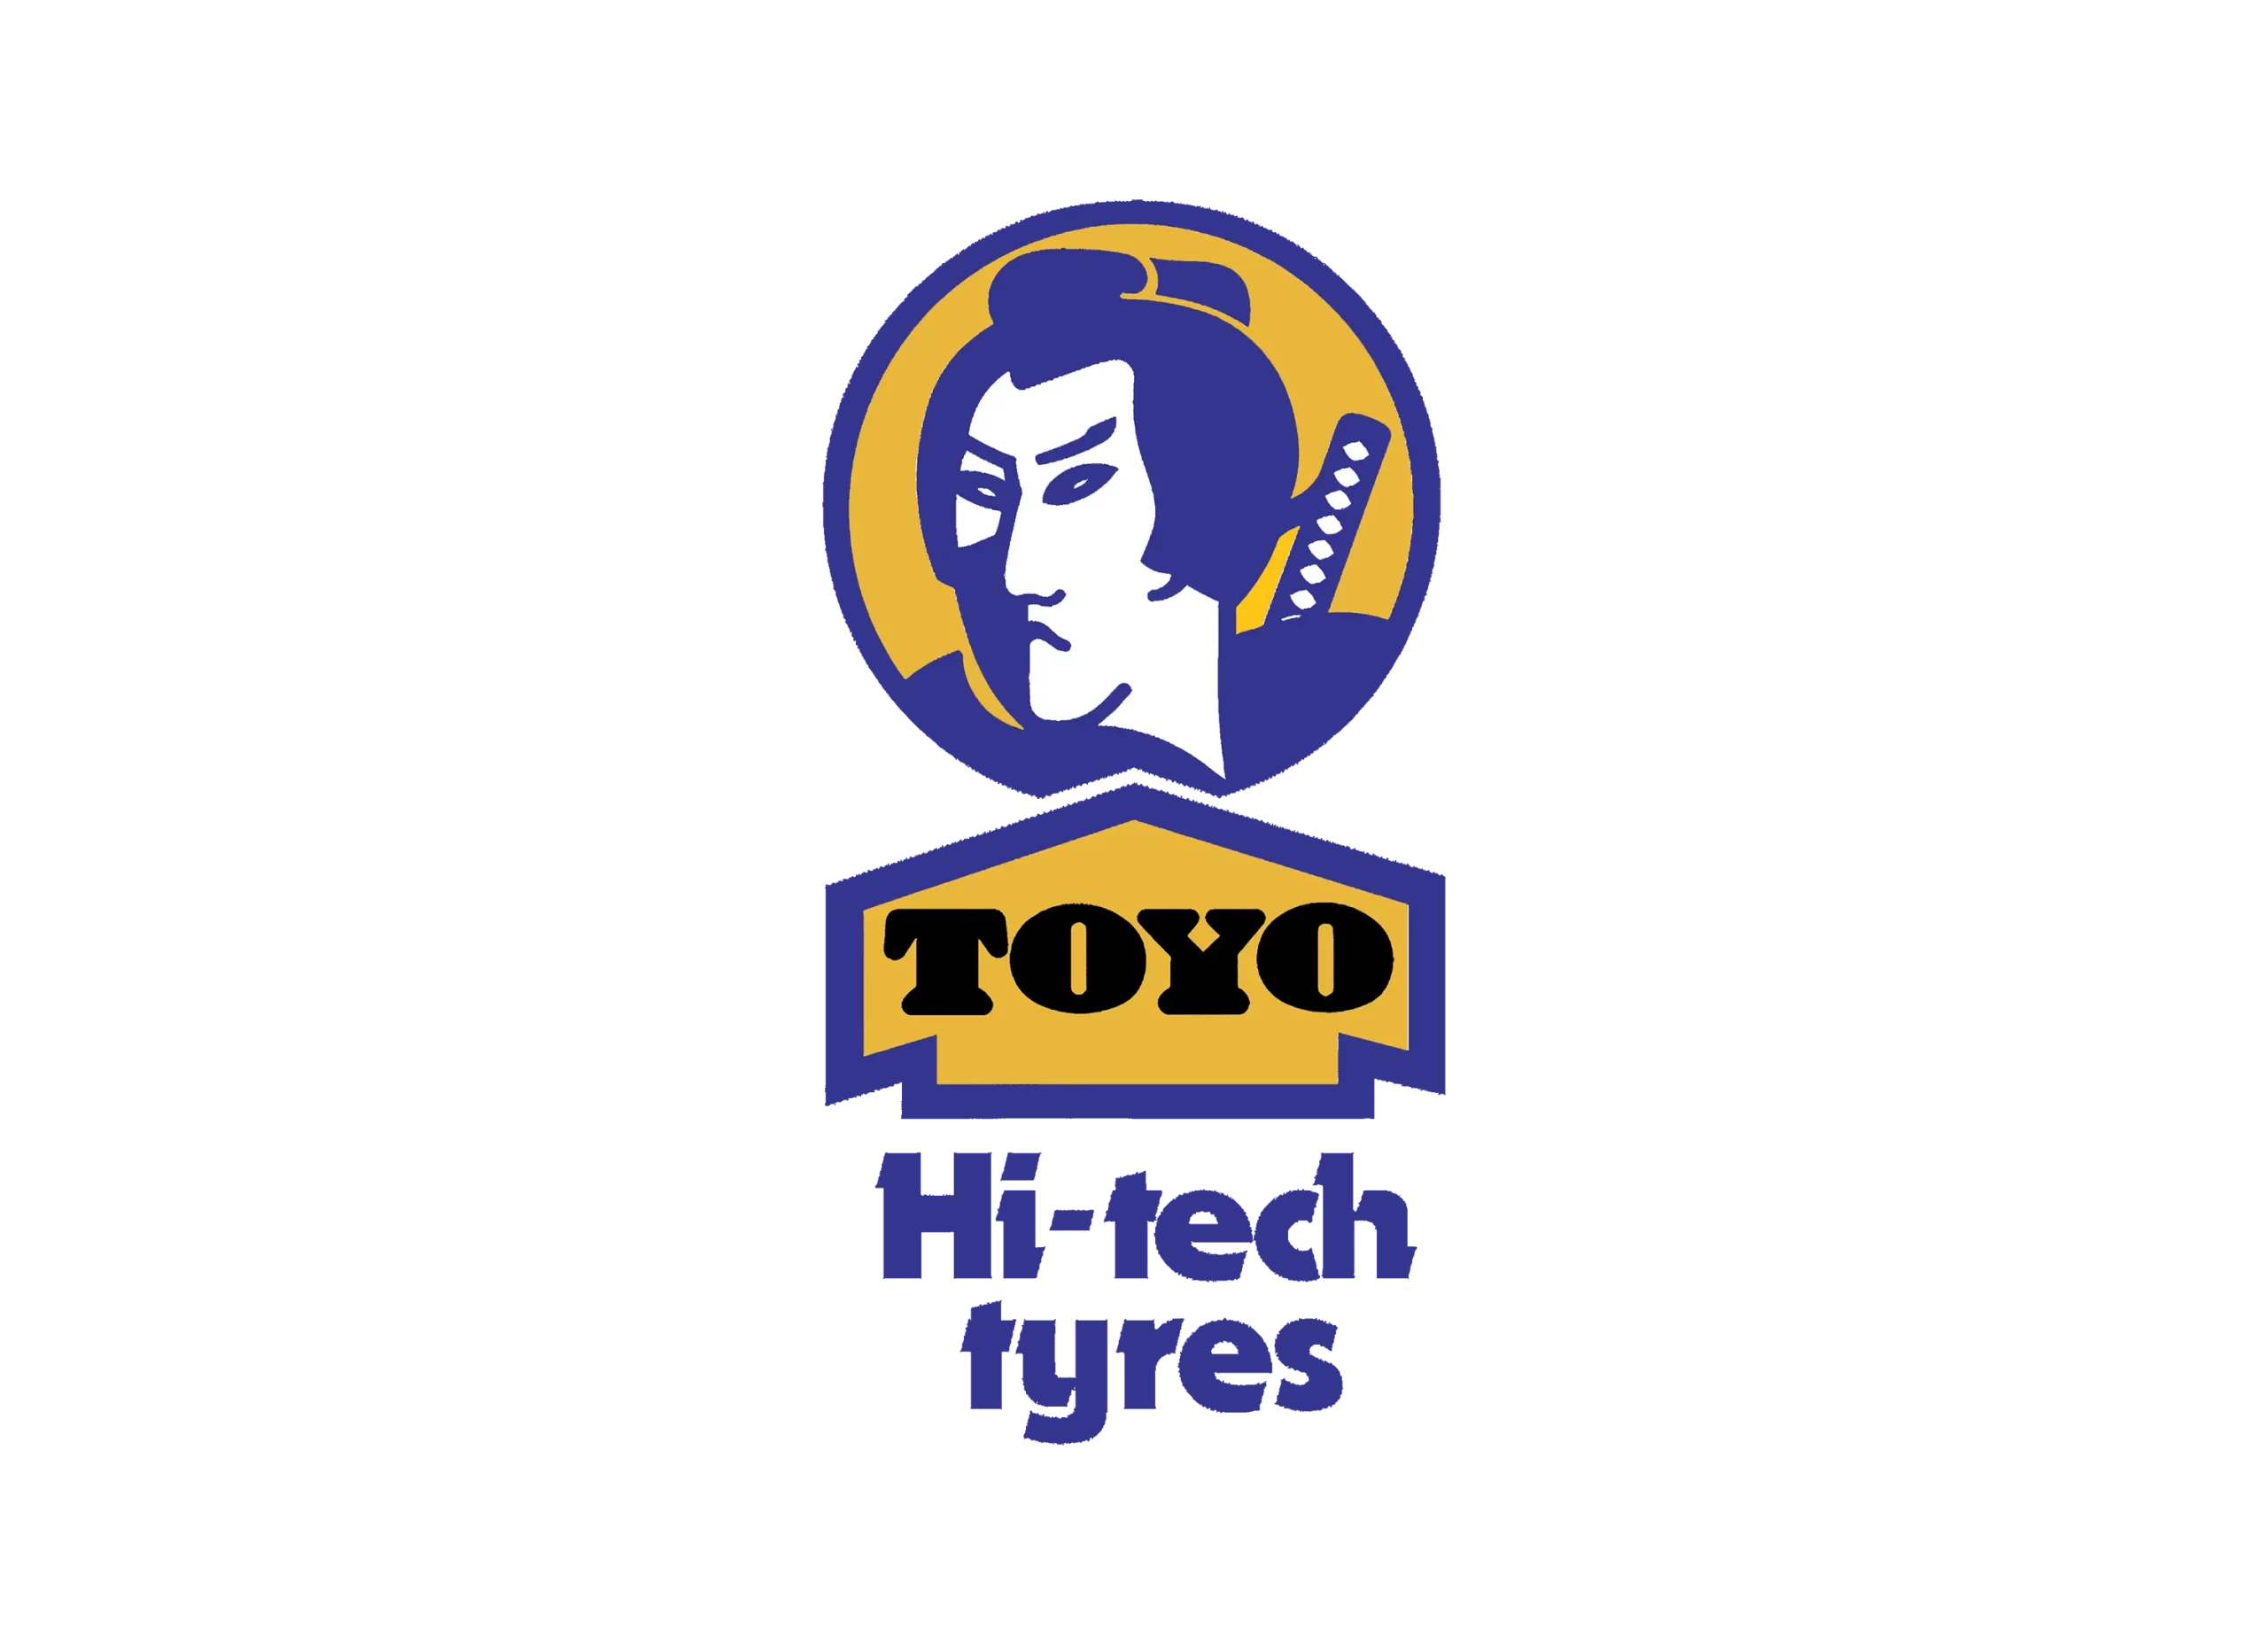 Toyo logo old